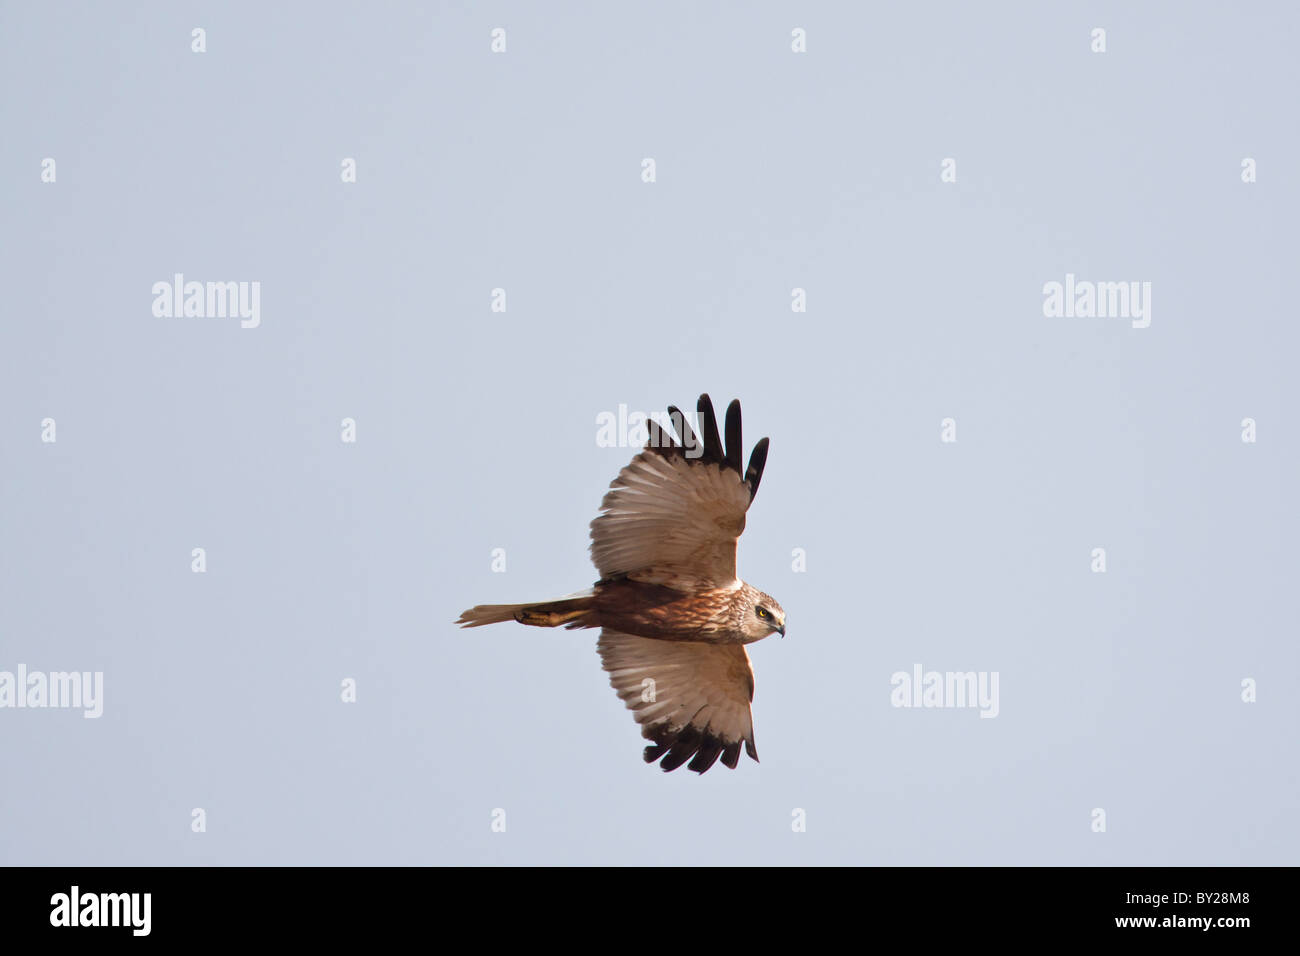 Marsh Harrier in flight against a clear blue sky Stock Photo